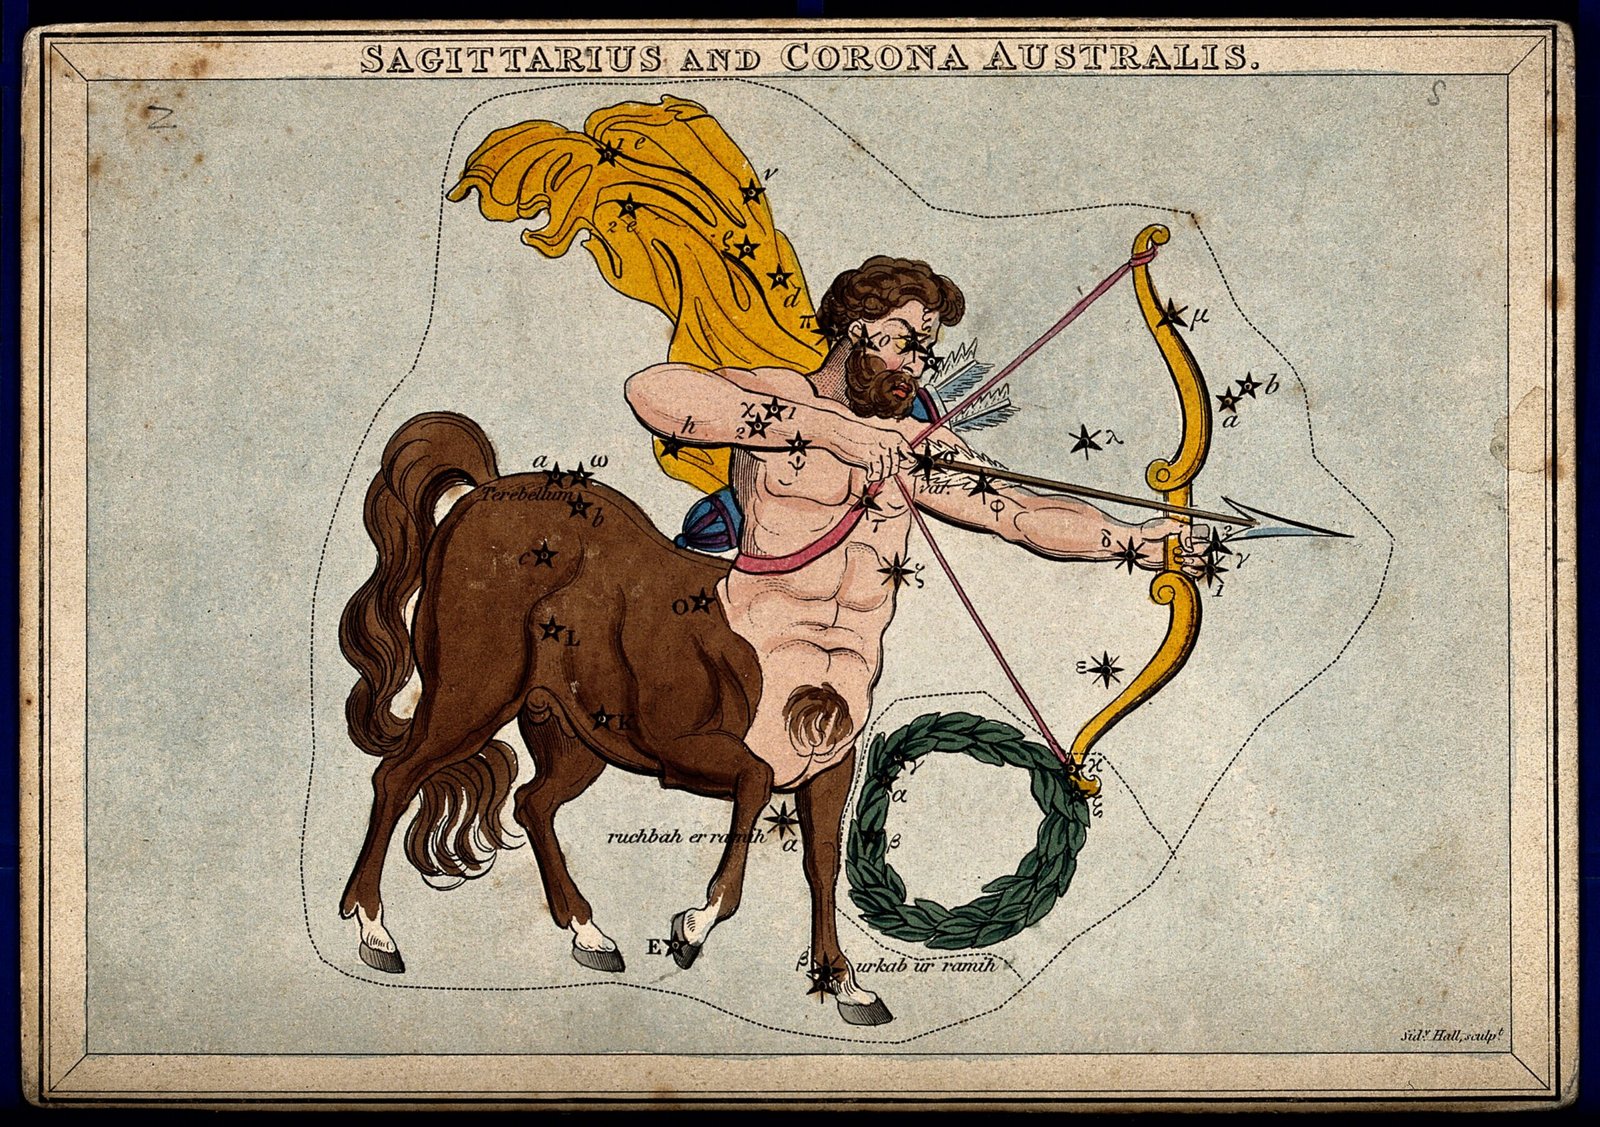 Sagittarius and Aries: Adventurous Love or Too Wild?